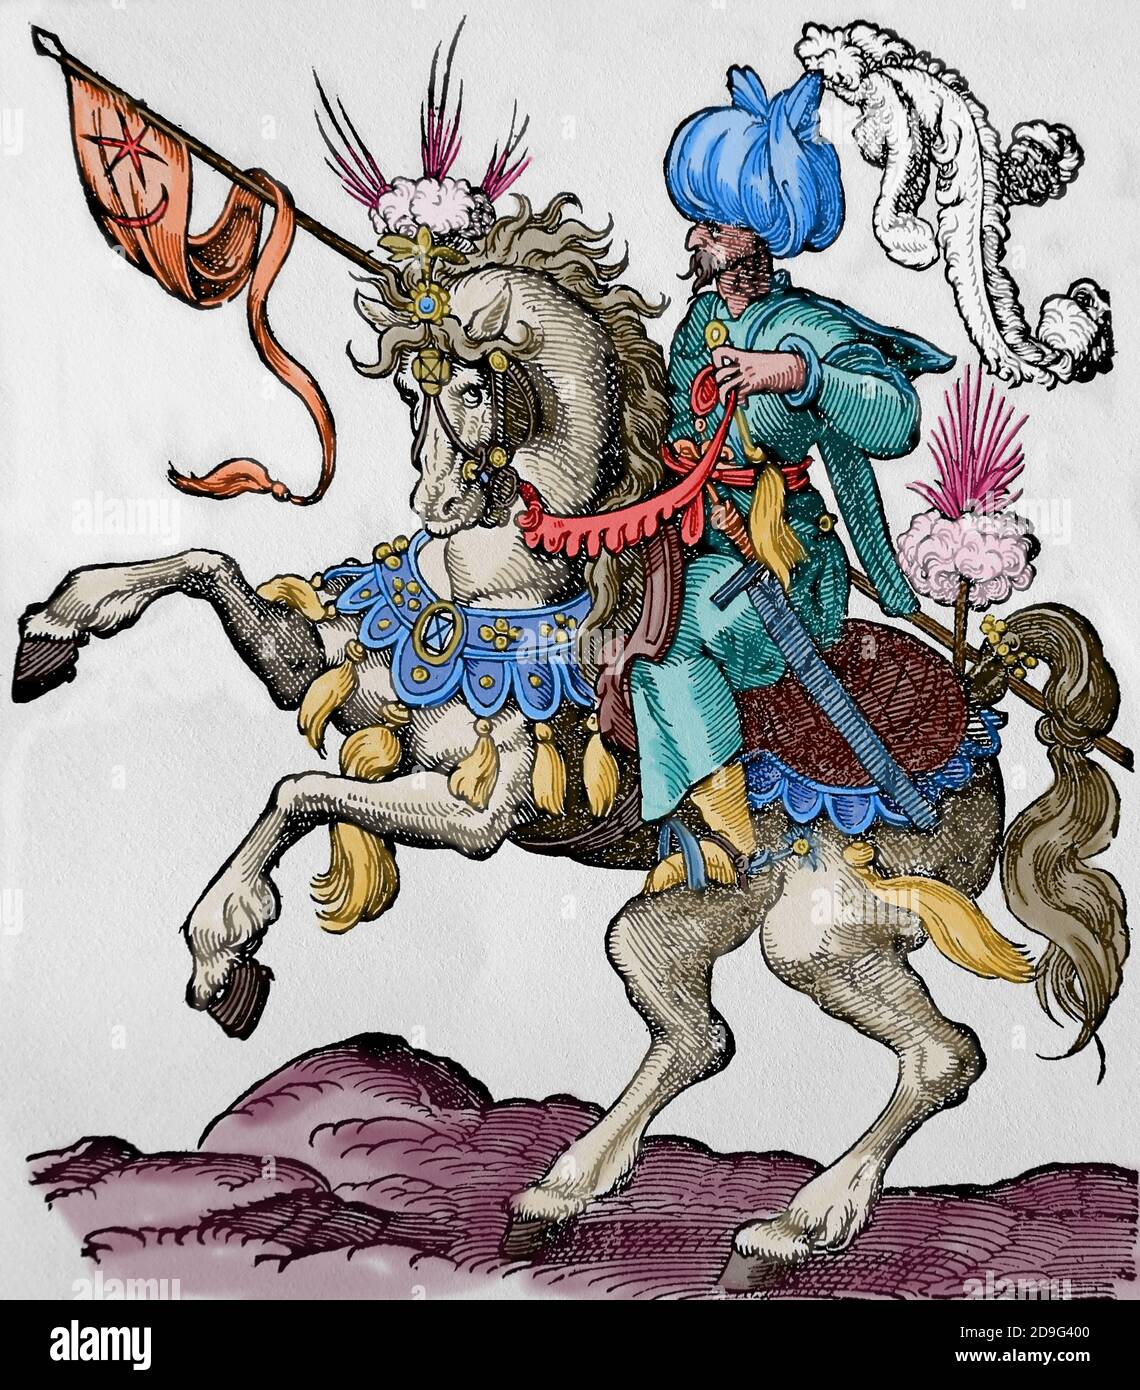 Modern era. Ottoman Empire. 16th century. Turkish cavalryman with pennant. Engraving by Jost Amman, 16th century. Later colouration. Stock Photo